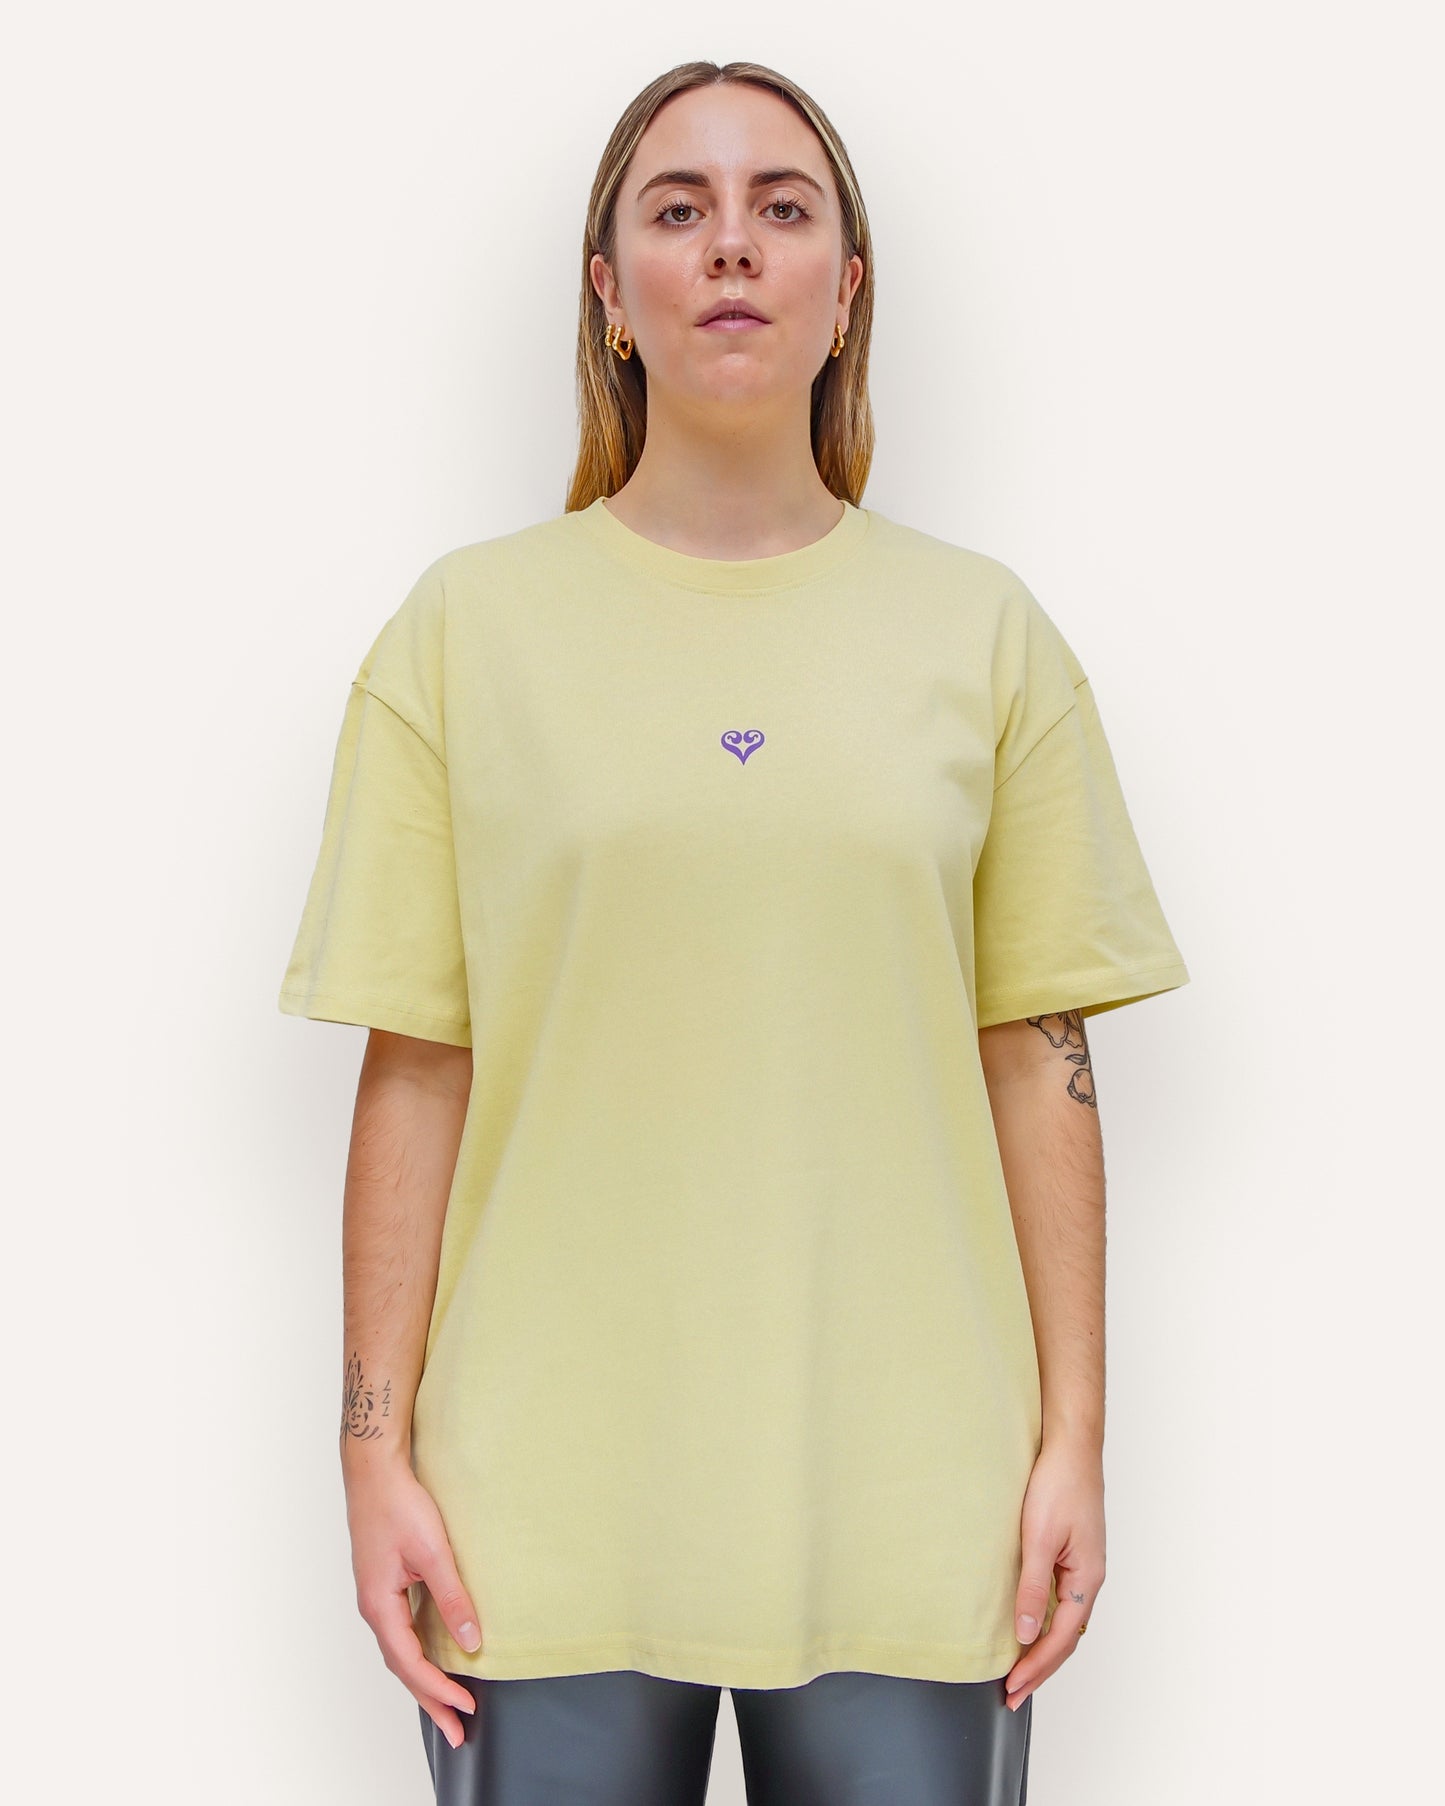 »SEID LIEB« Unisex Oversized T-Shirt Gelb